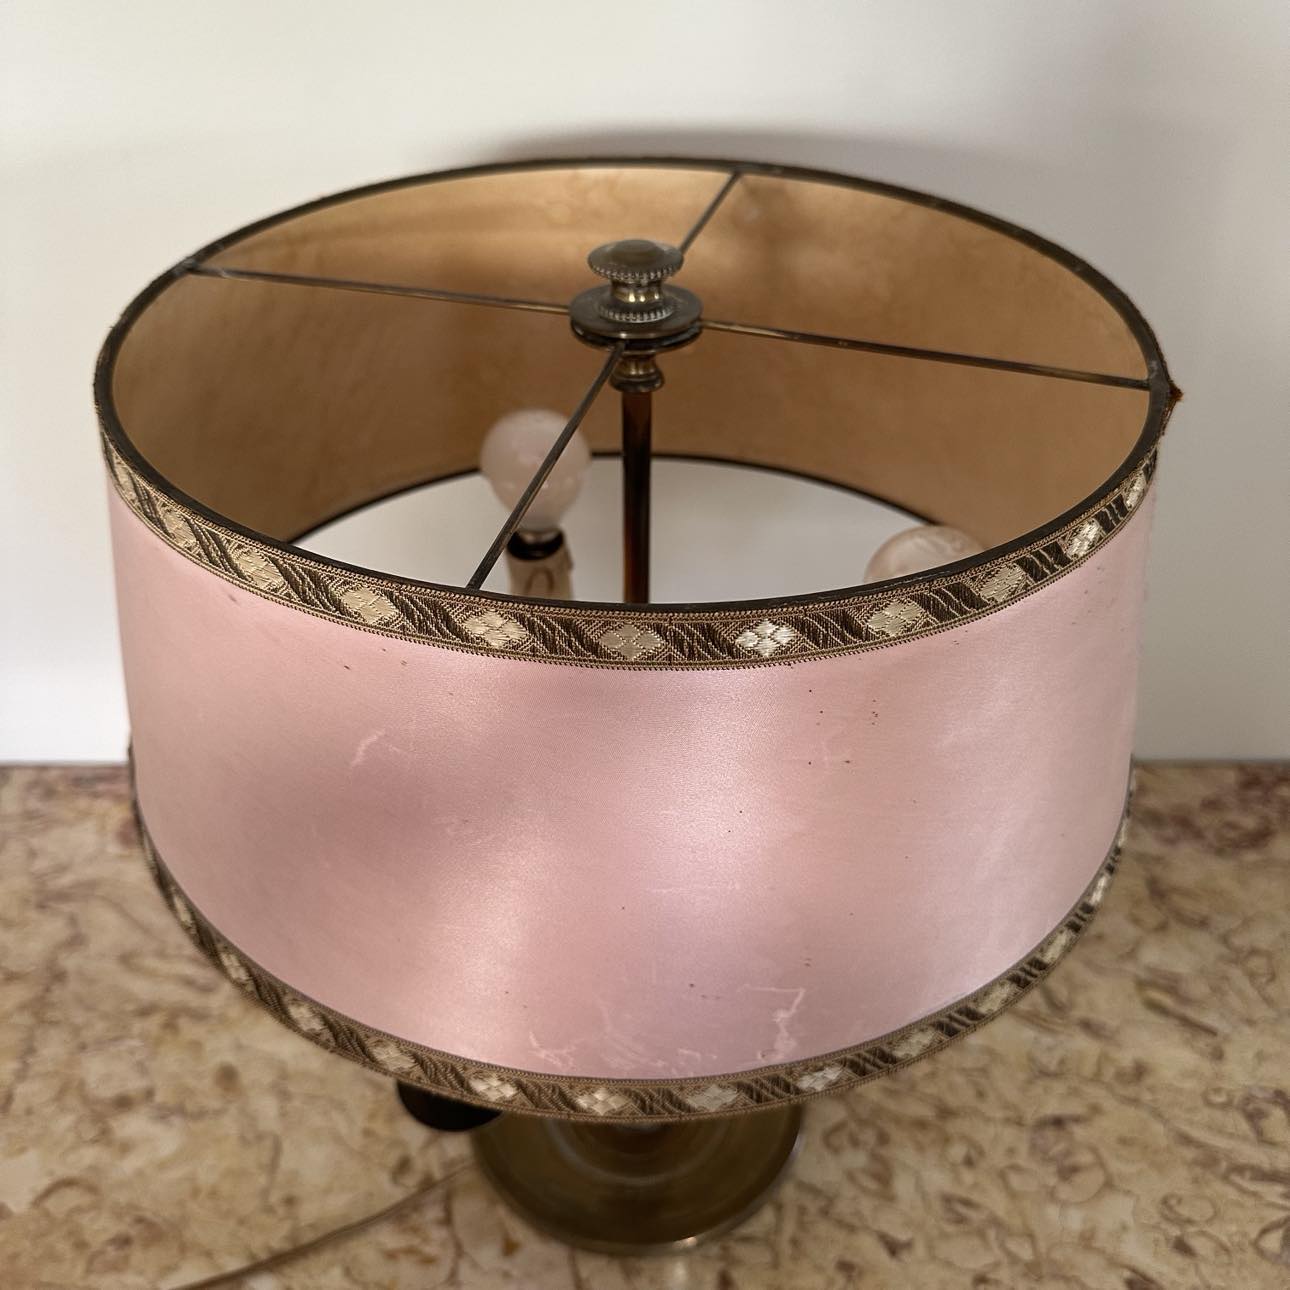 Bronze Table Lamp